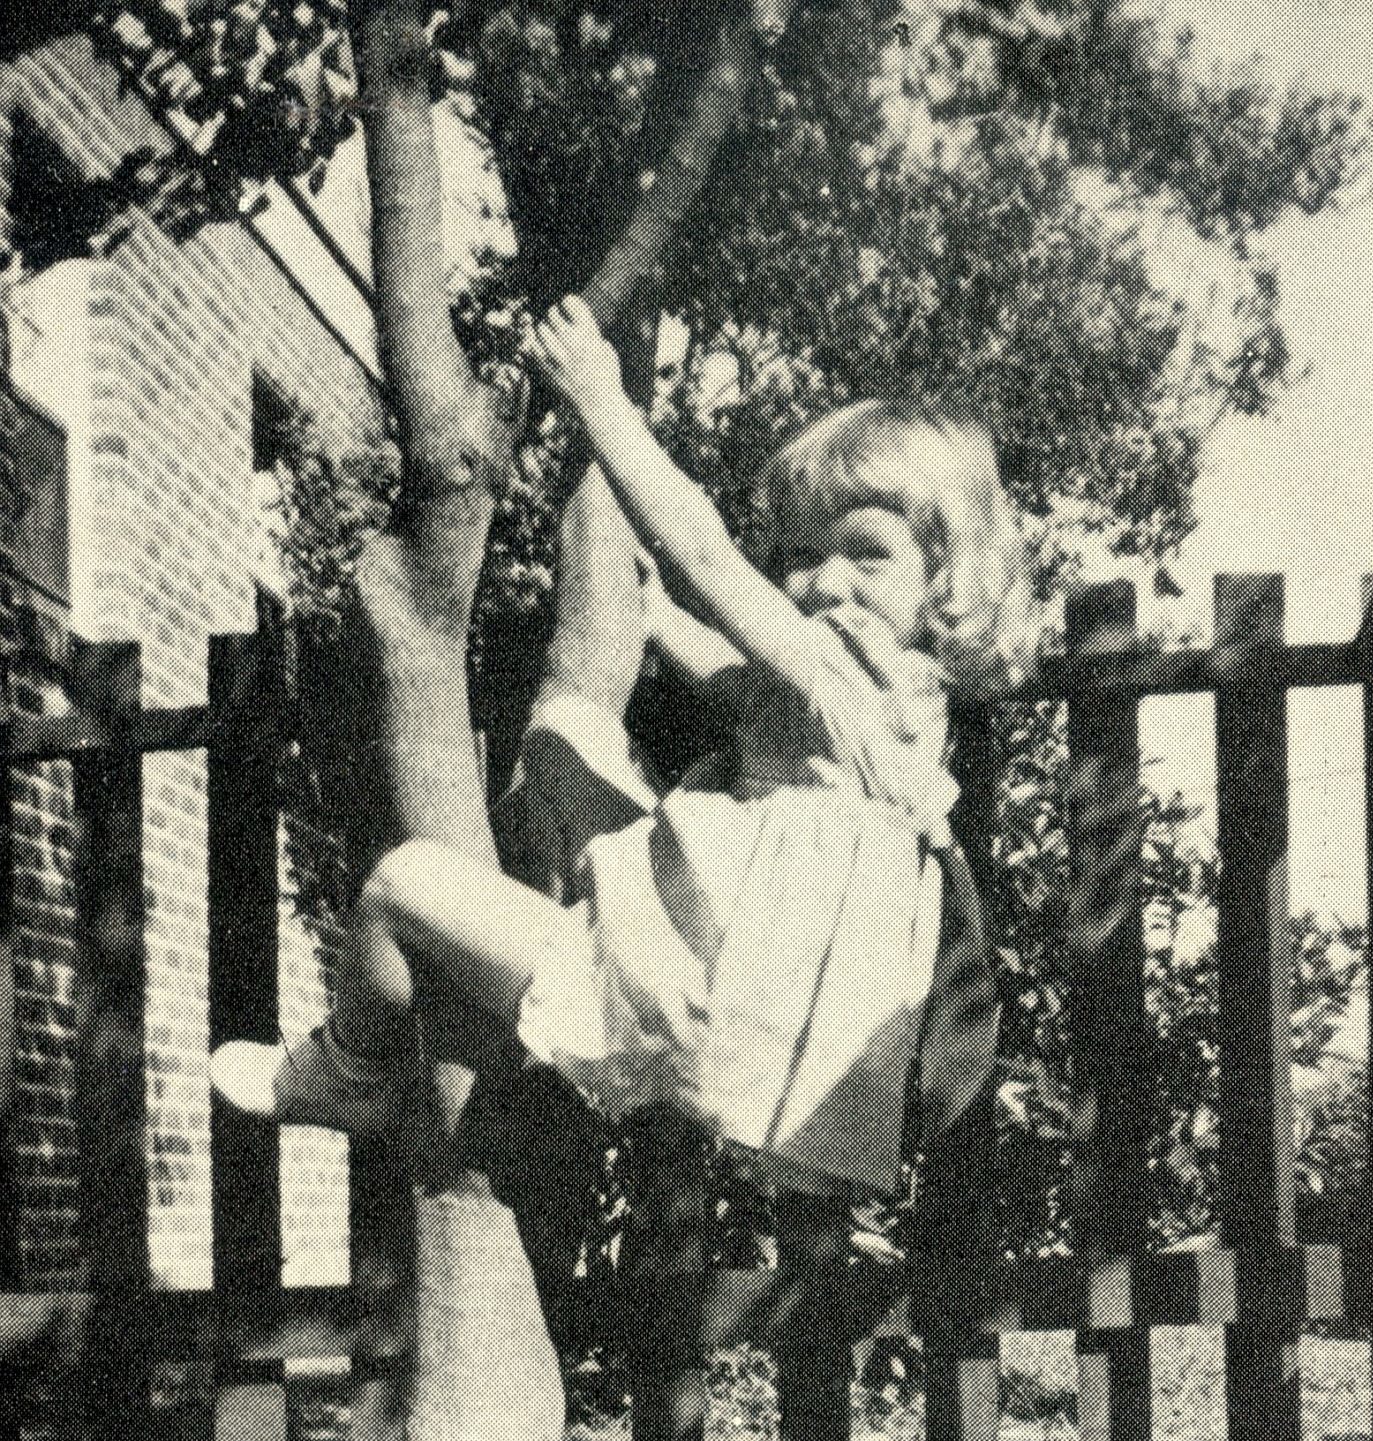 Young Janis Joplin in Port Arthur Texas